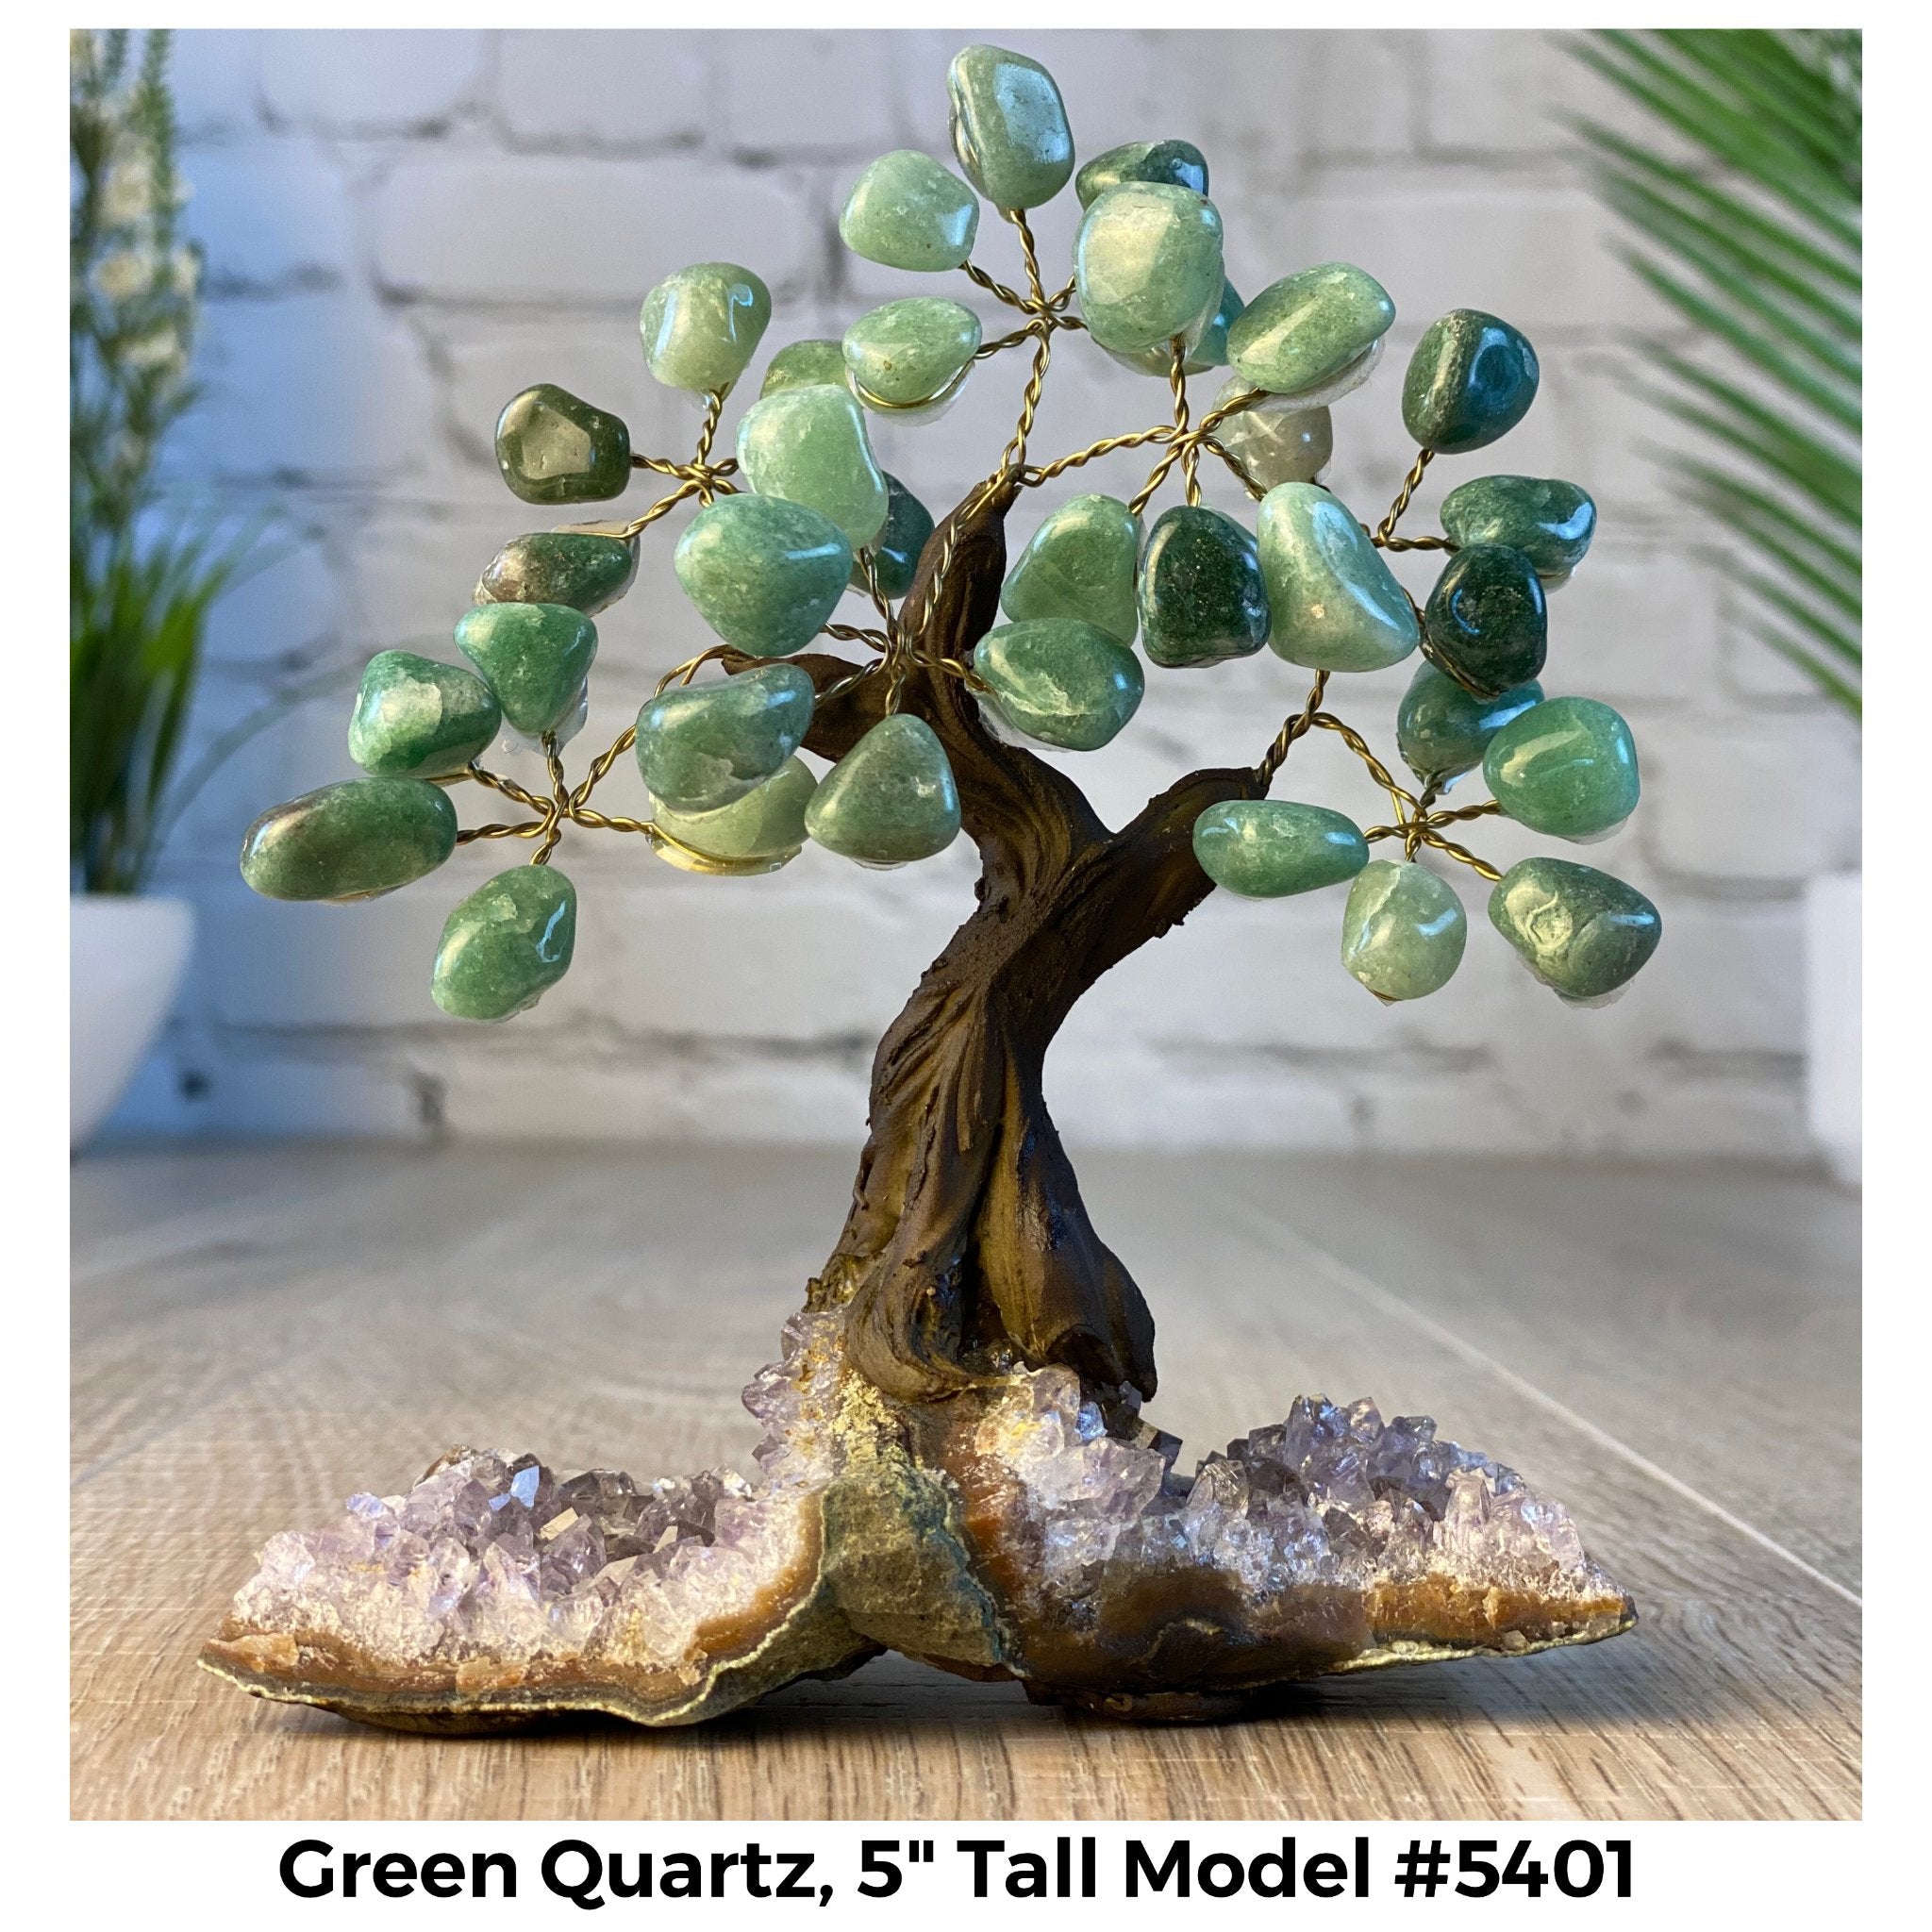 Green Quartz 5" Tall Handmade Gemstone Tree on a Crystal base, 35 Gems #5401GRNQ - Brazil GemsBrazil GemsGreen Quartz 5" Tall Handmade Gemstone Tree on a Crystal base, 35 Gems #5401GRNQGemstone Trees5401GRNQ